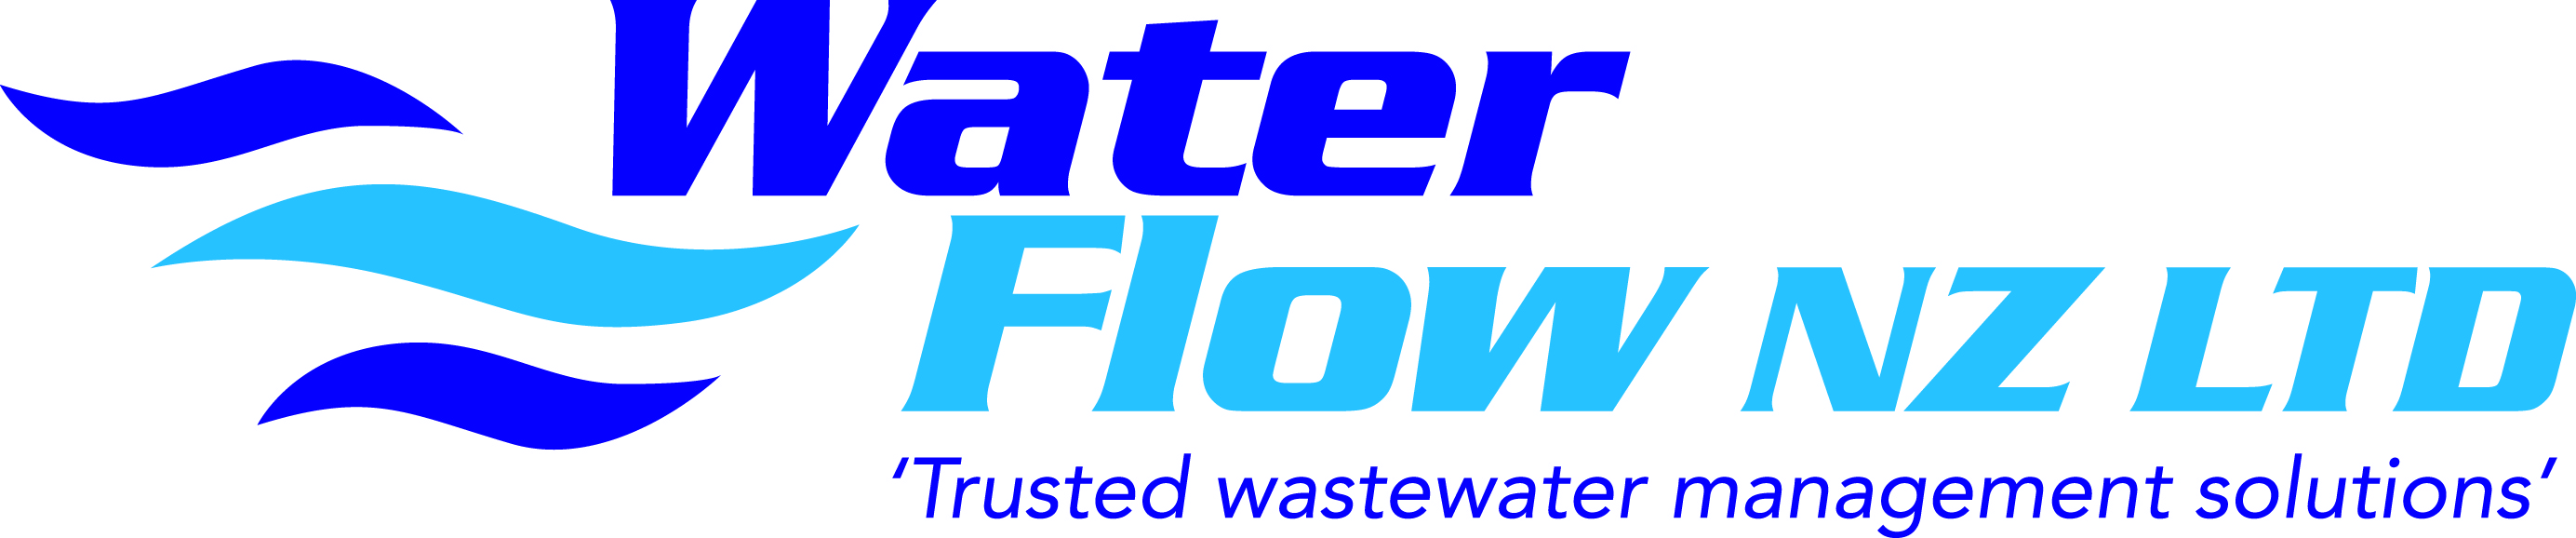 waterflow logo